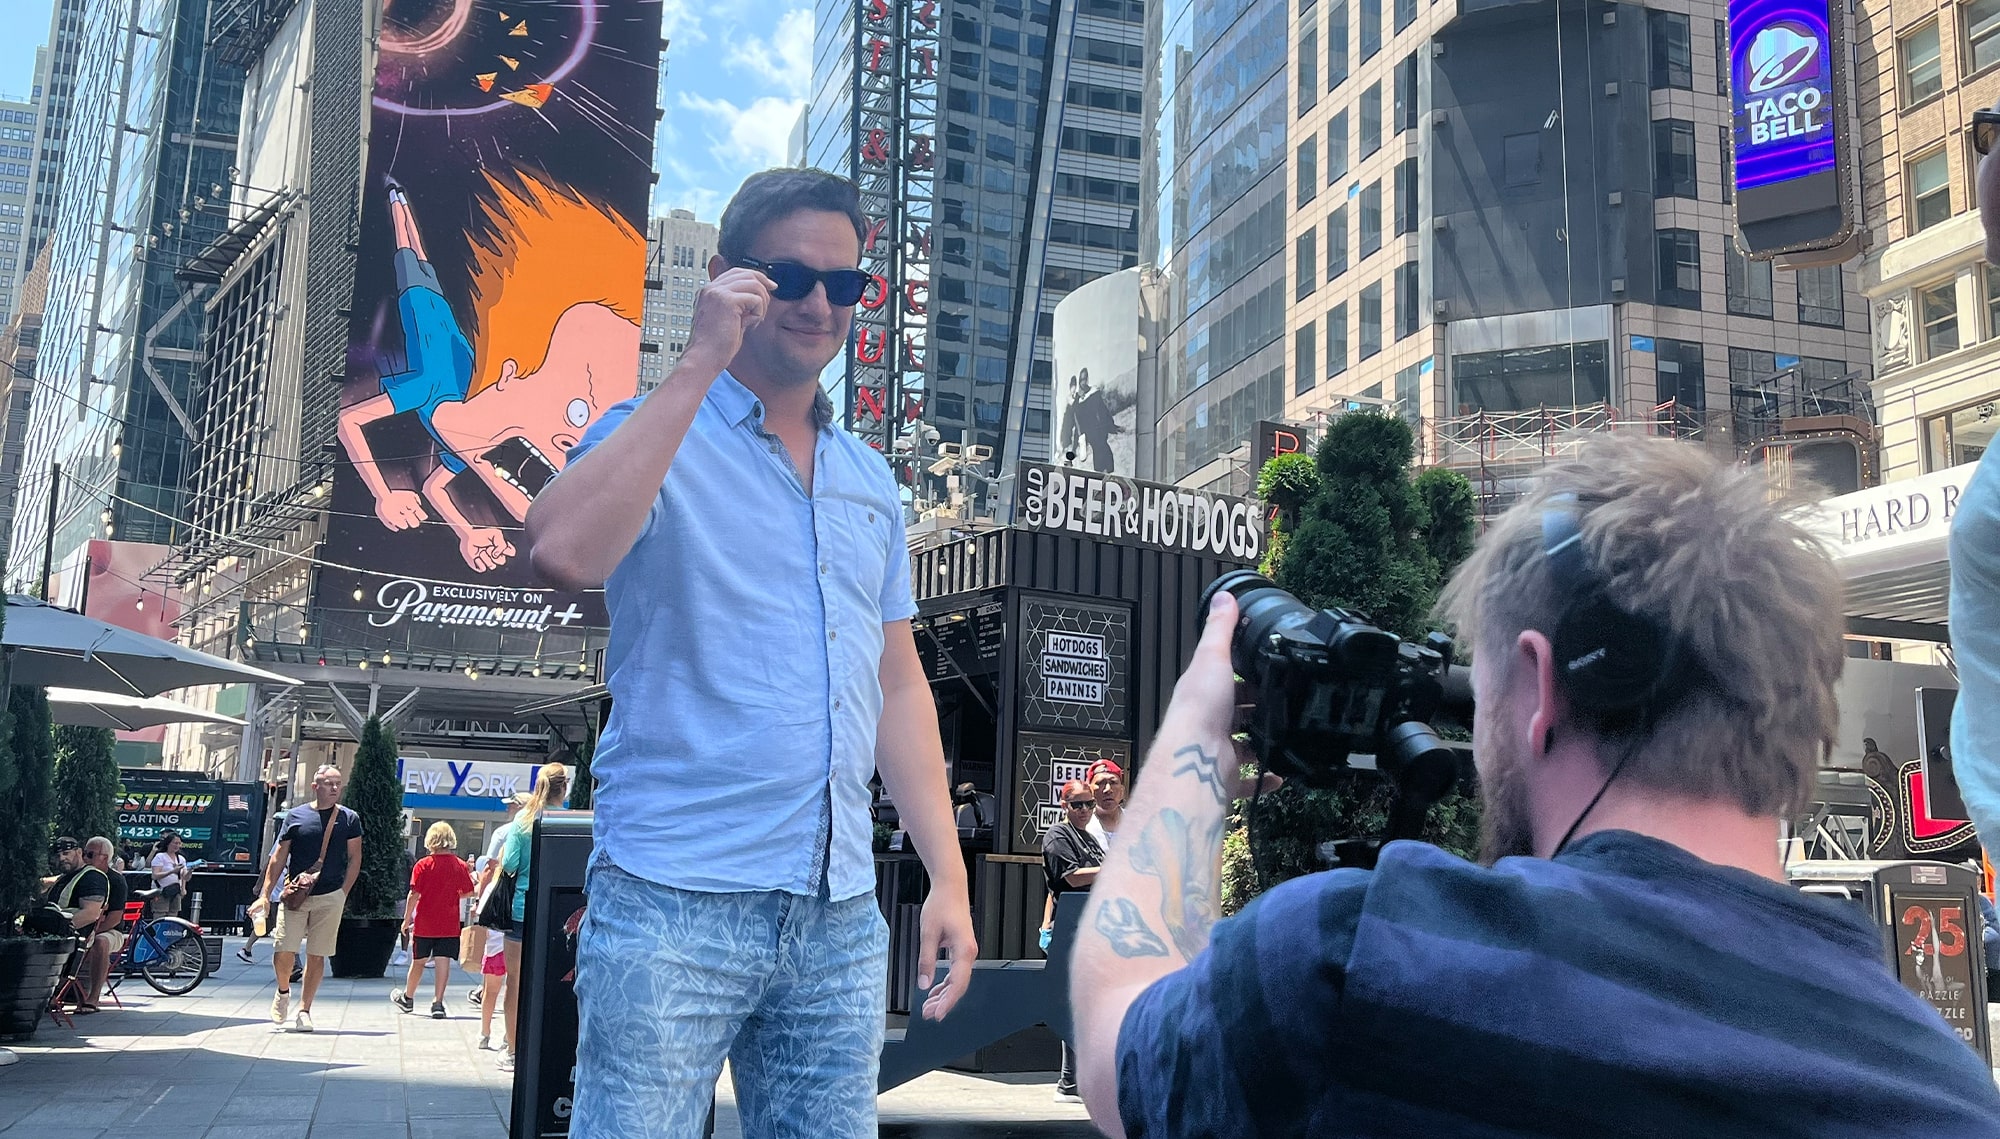 Times Square video team